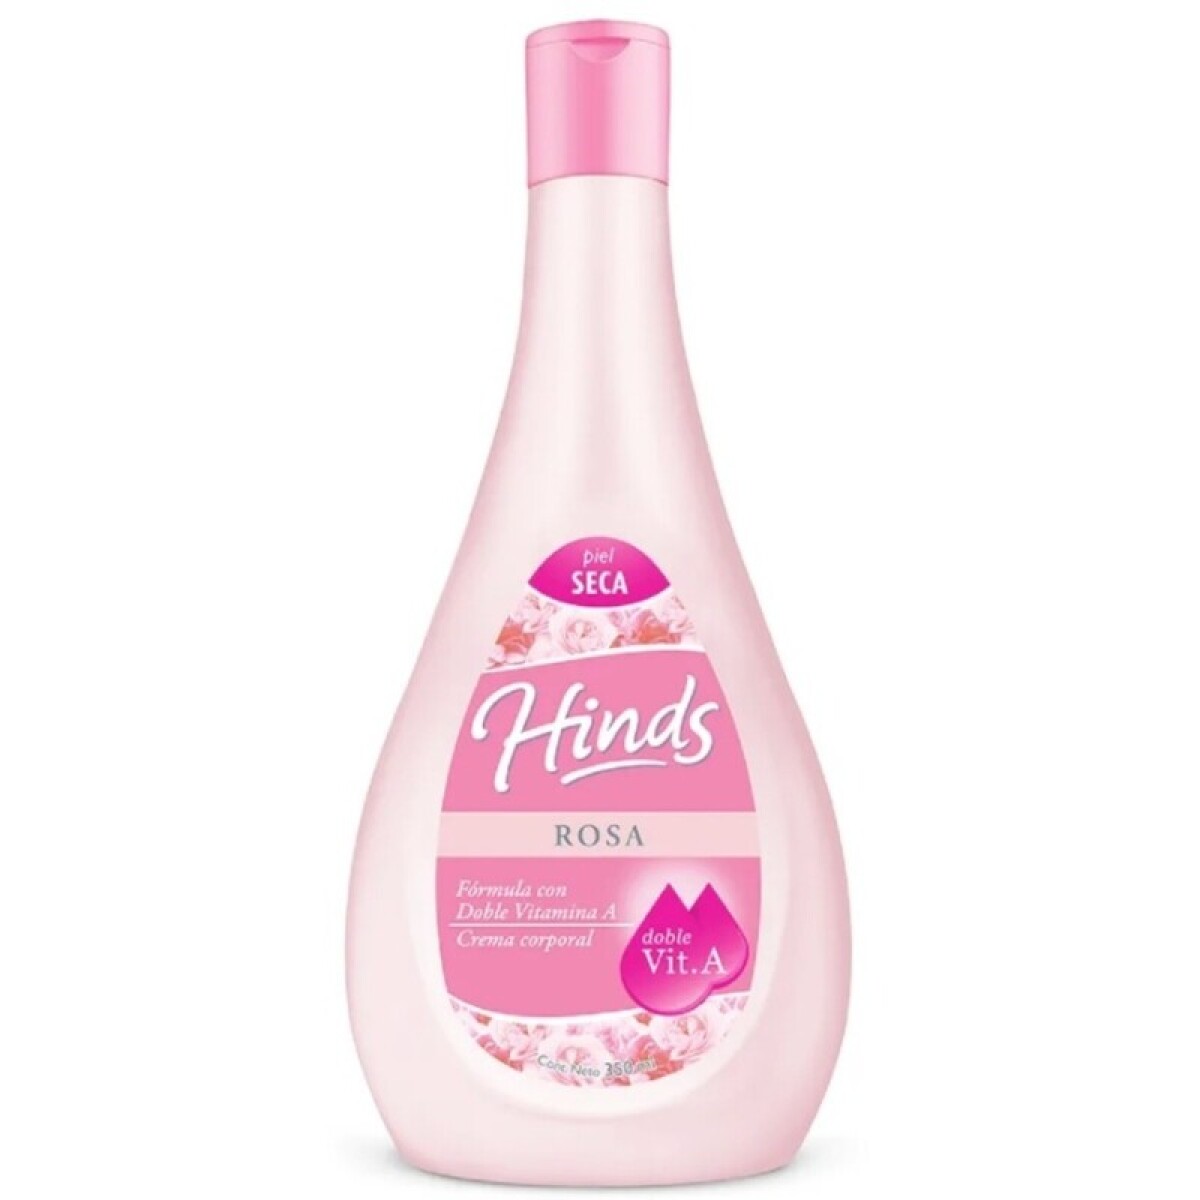 Hinds crema hidratante - Rosa 350 ml 